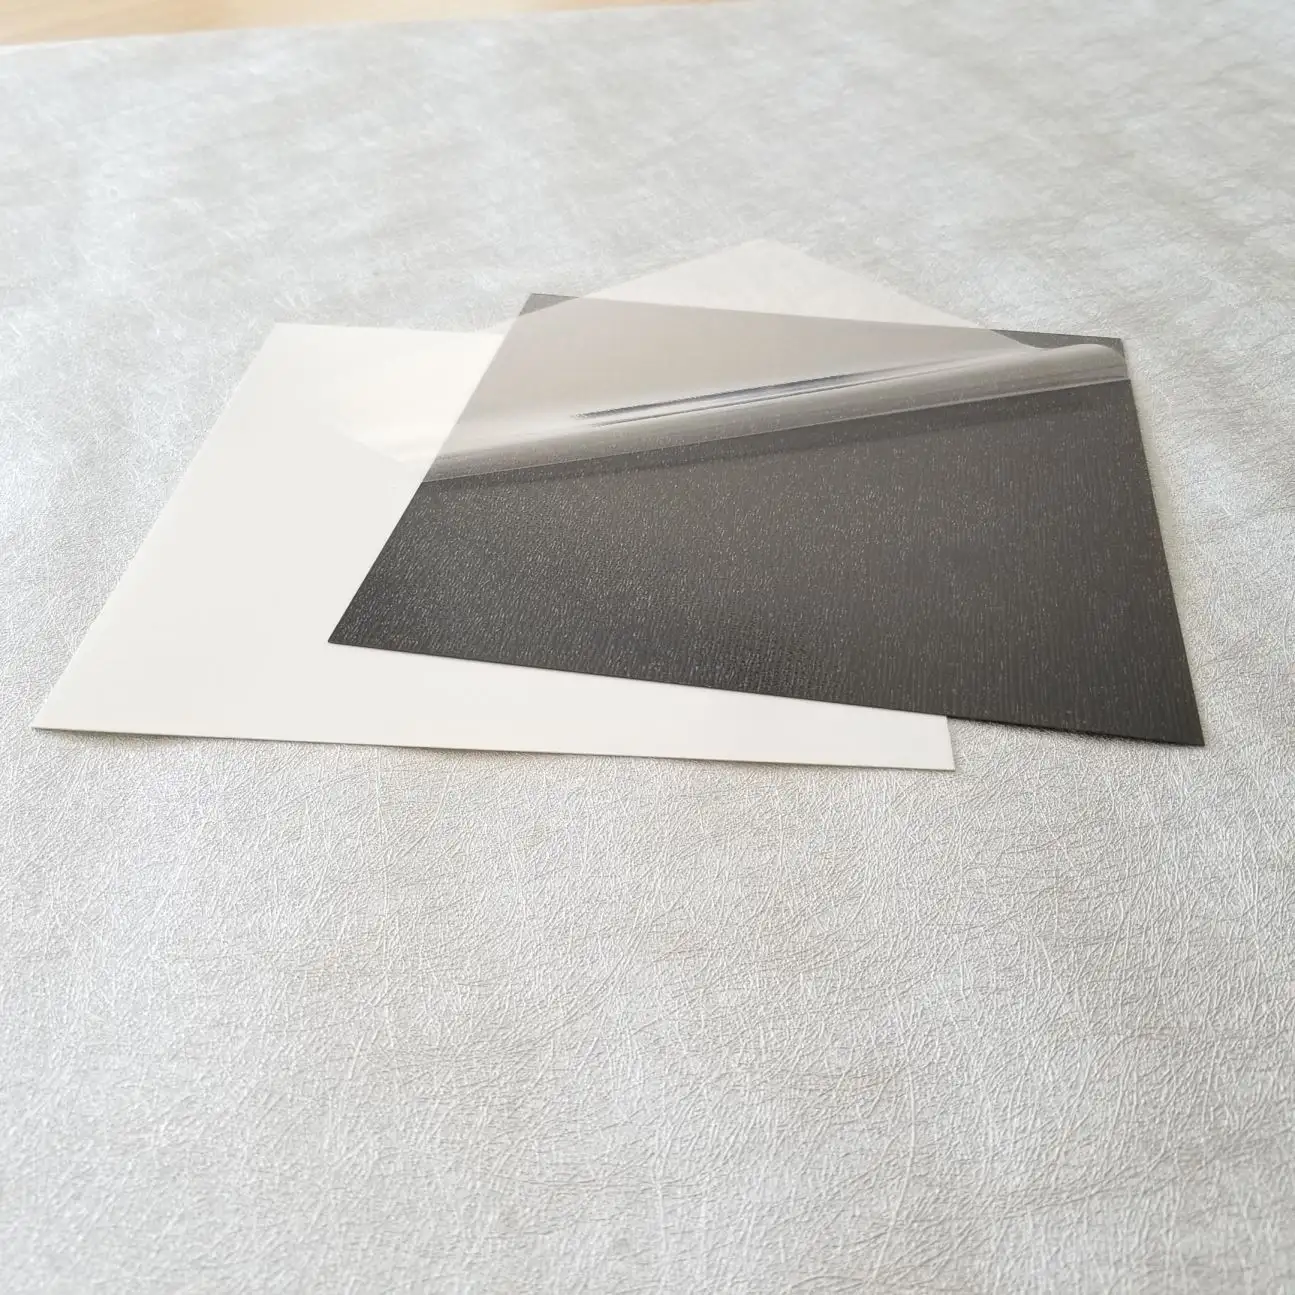 Low Price Self-Adhesive Photobook PVC Album Sheets